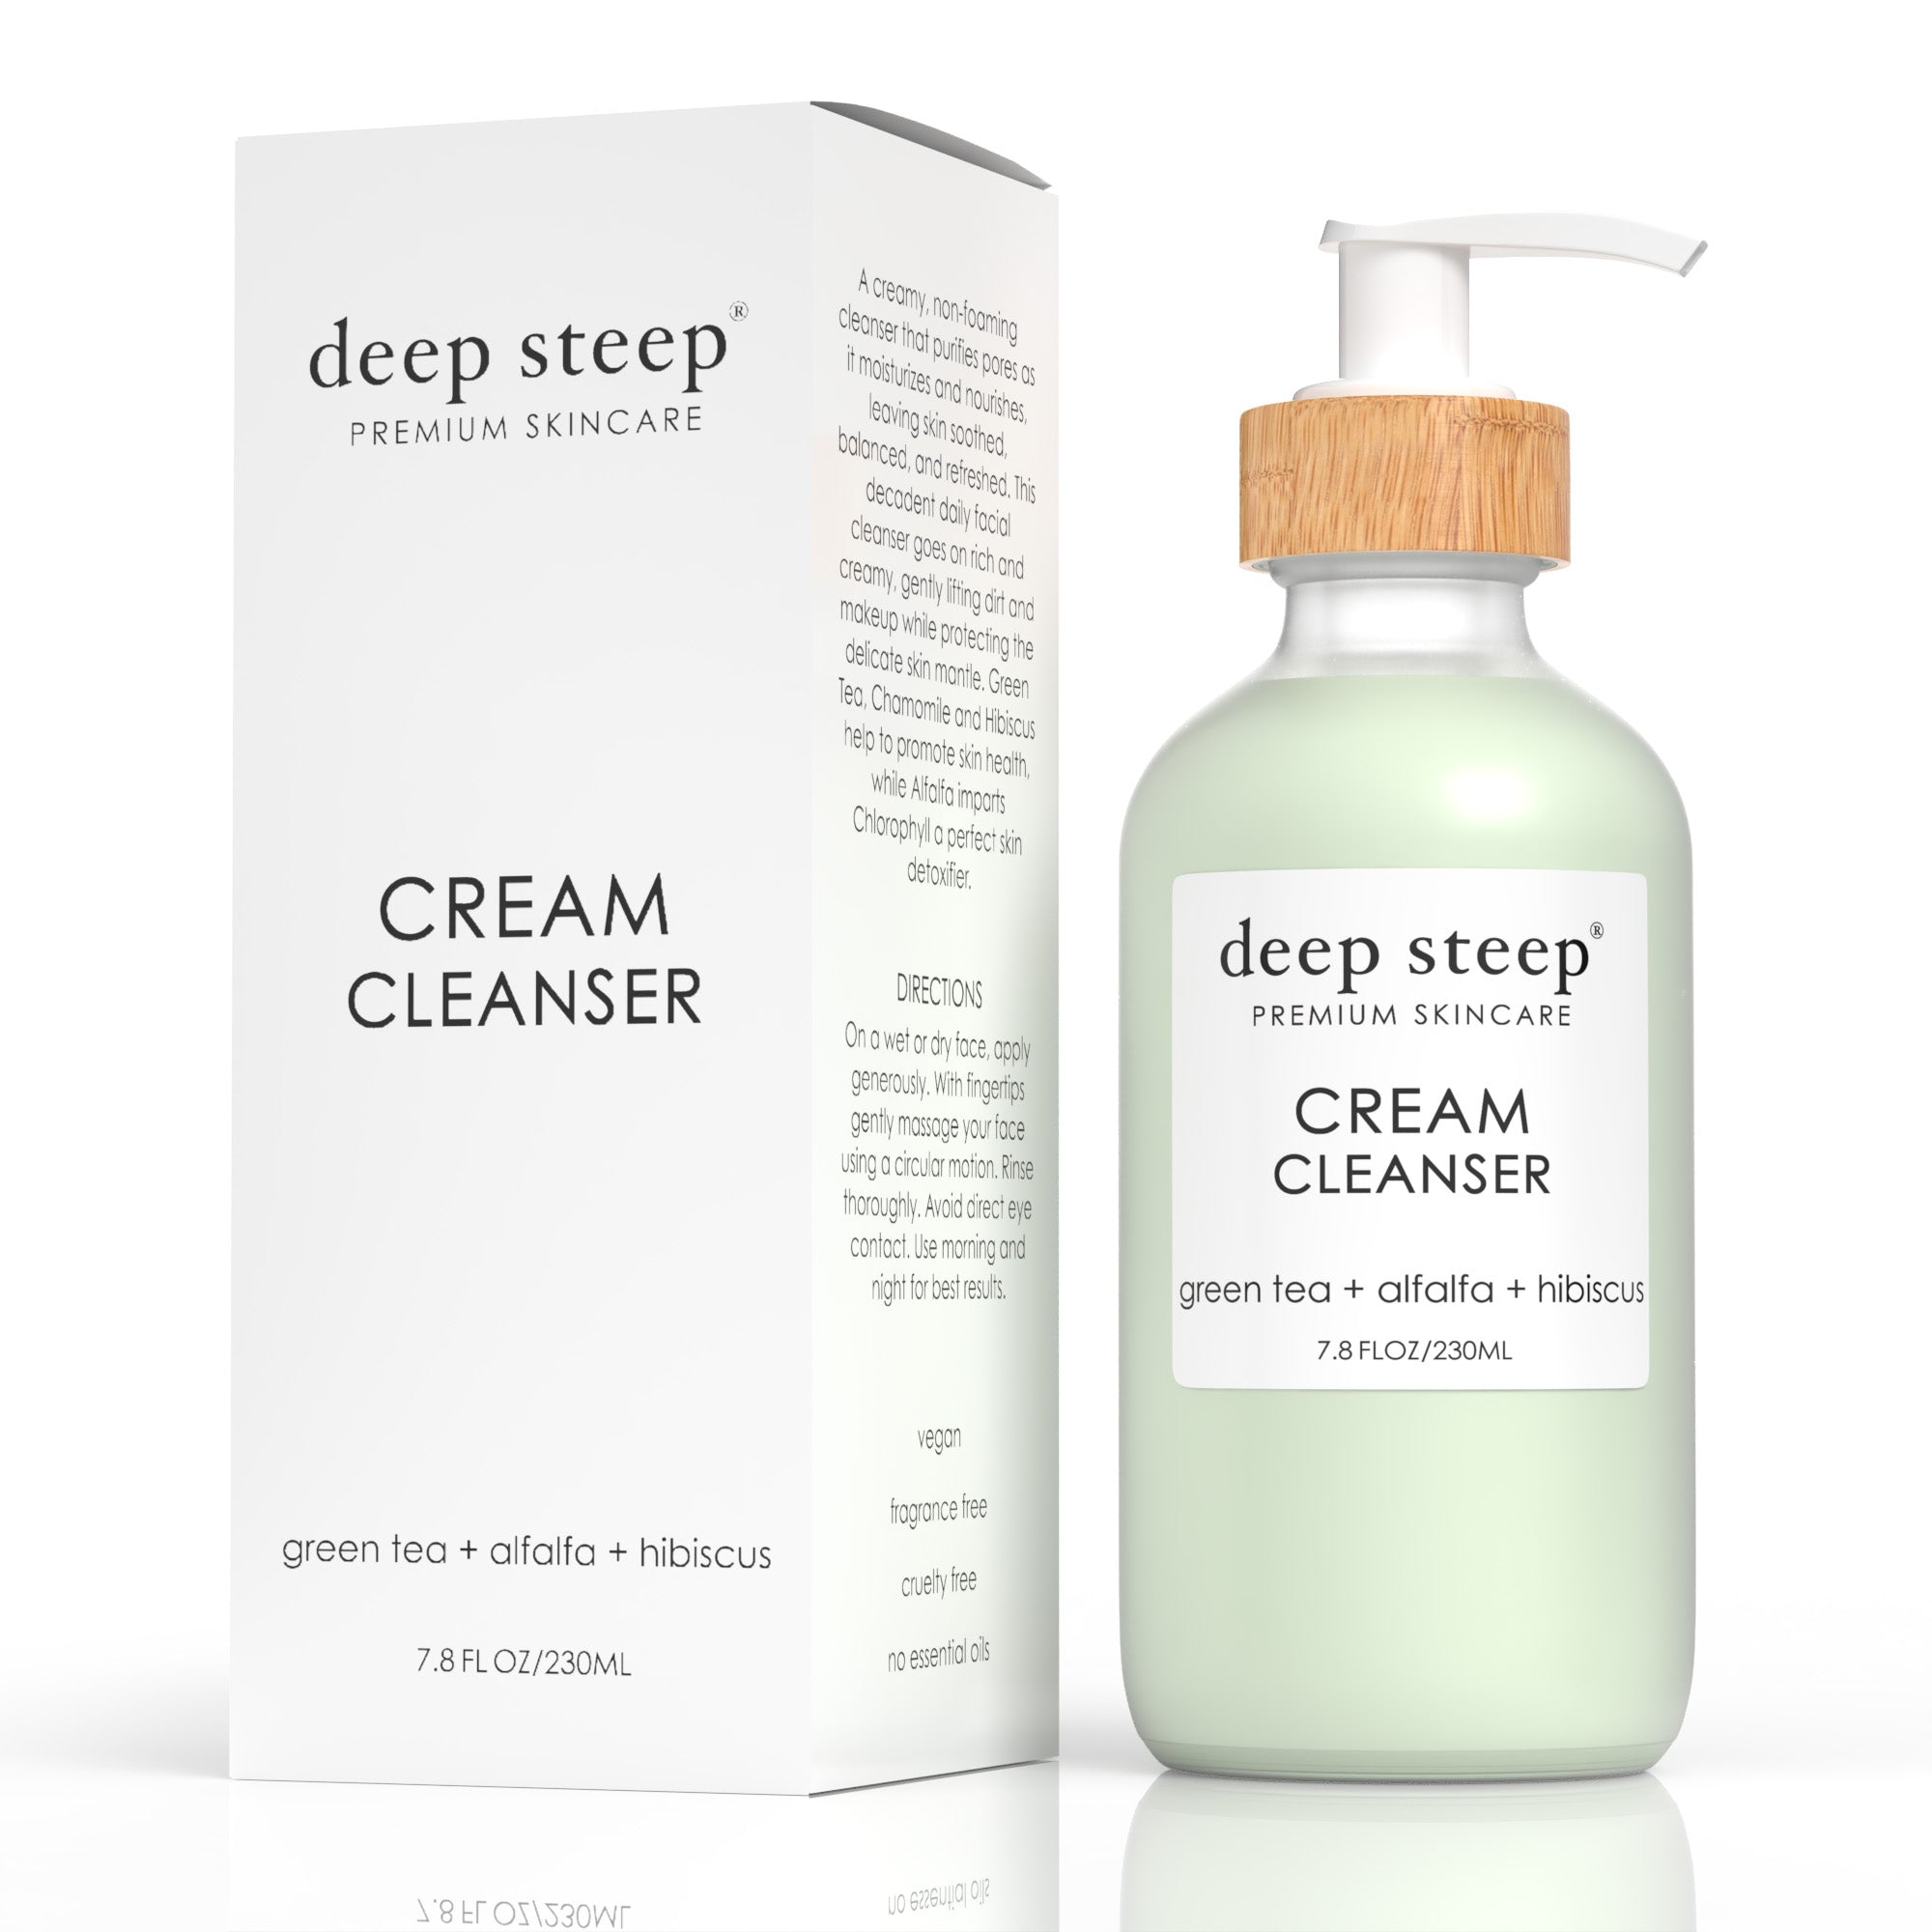 Cream Cleanser - Fragrance Free